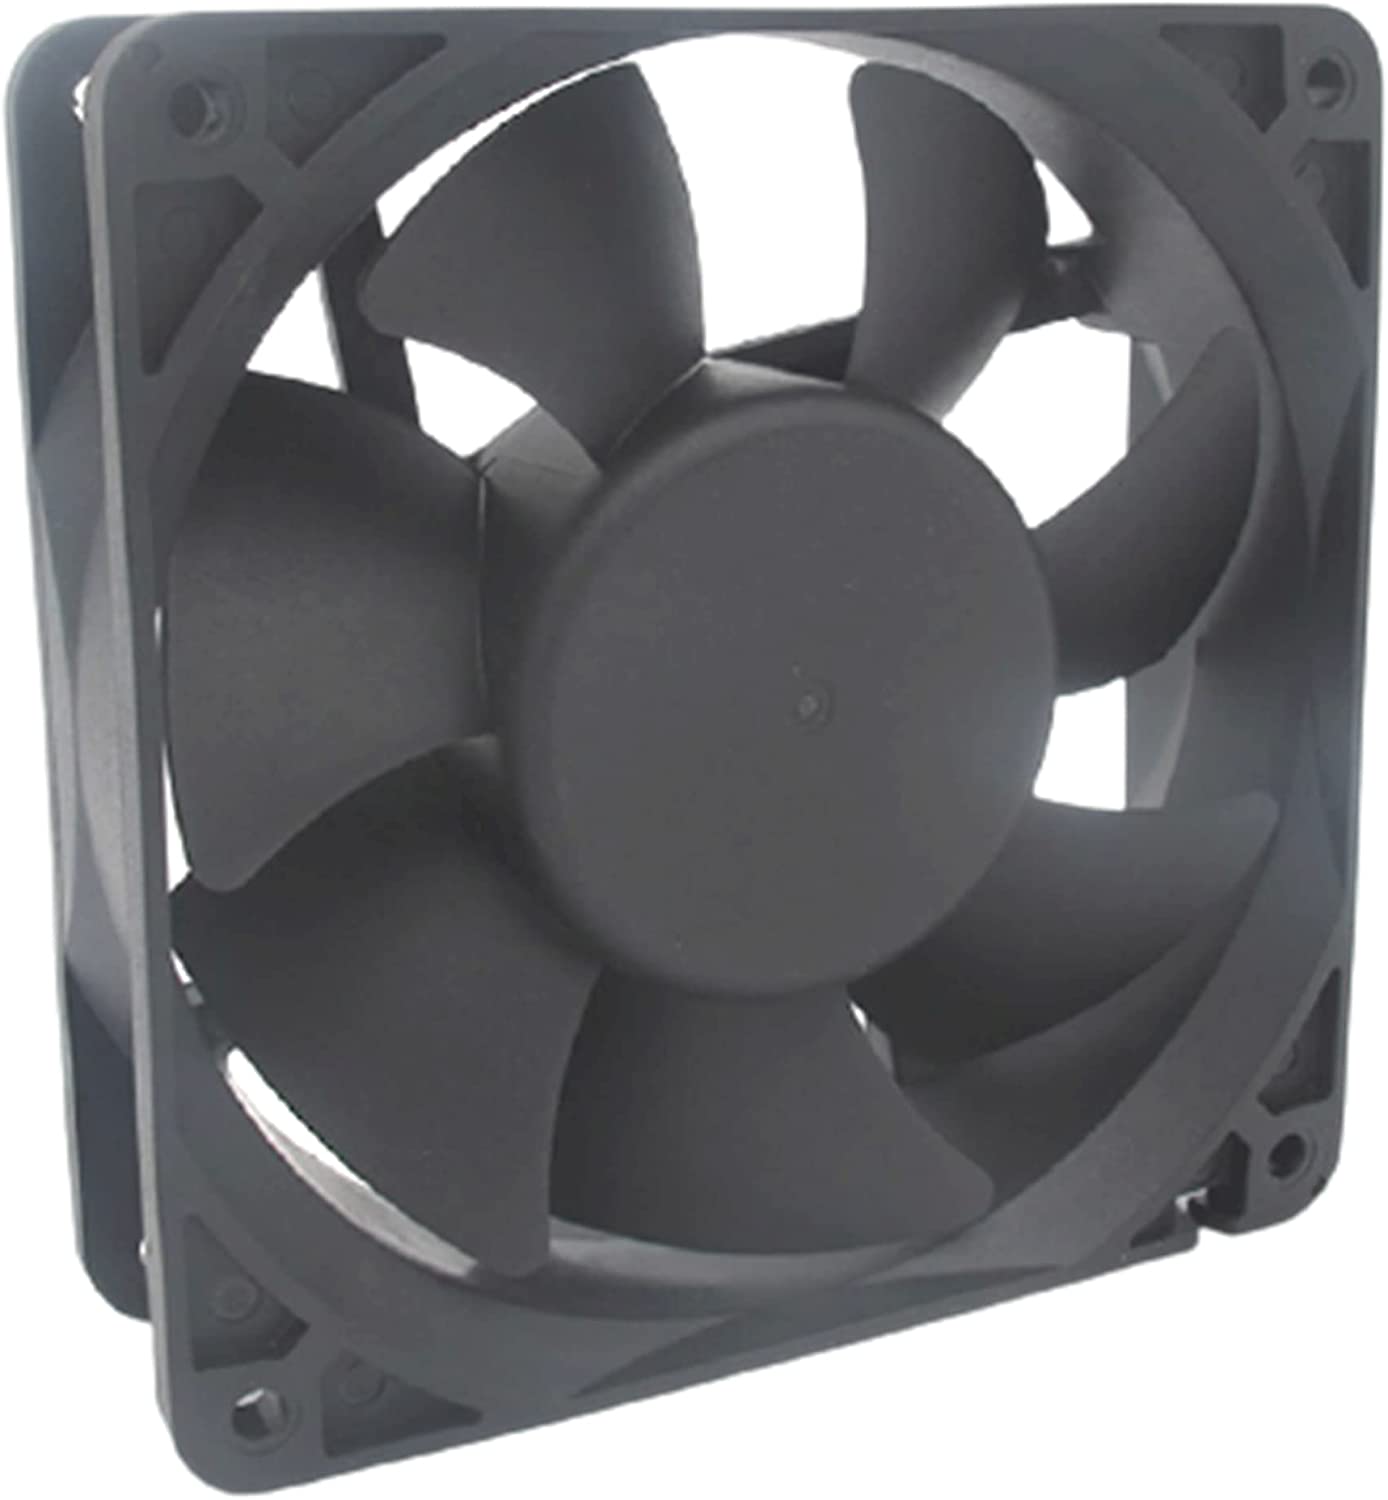 WAITCOOK Digital Fan Replacement for Masterbuilt Gravity Series 560/1050 XL Digital Charcoal Grill + Smokers